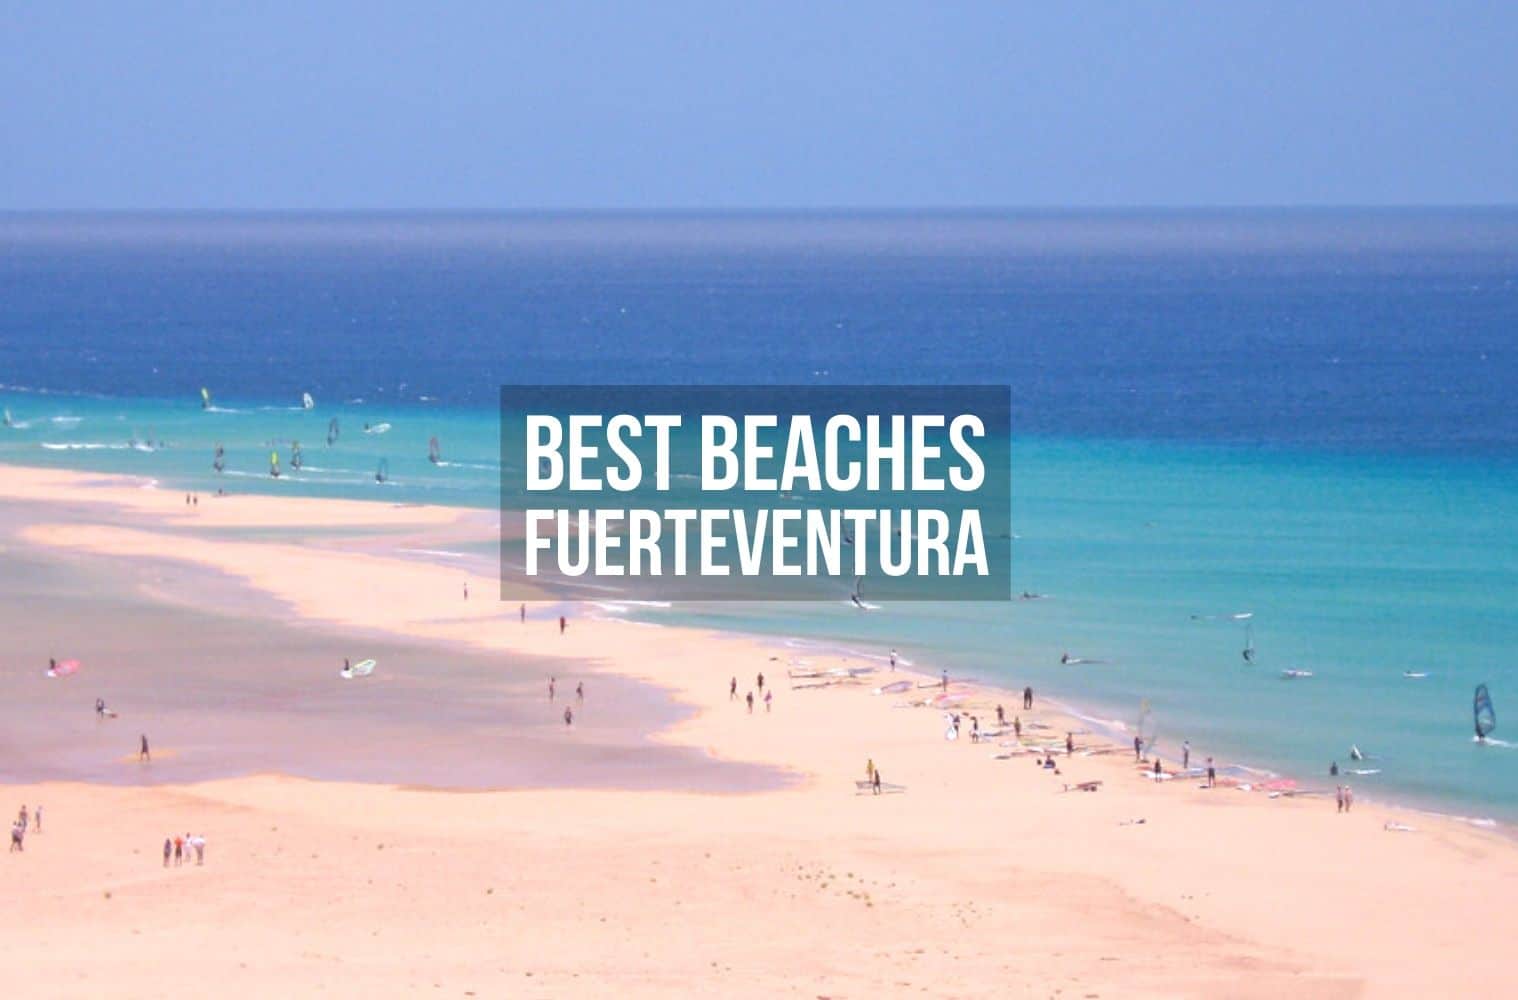 Best beaches Fuerteventura